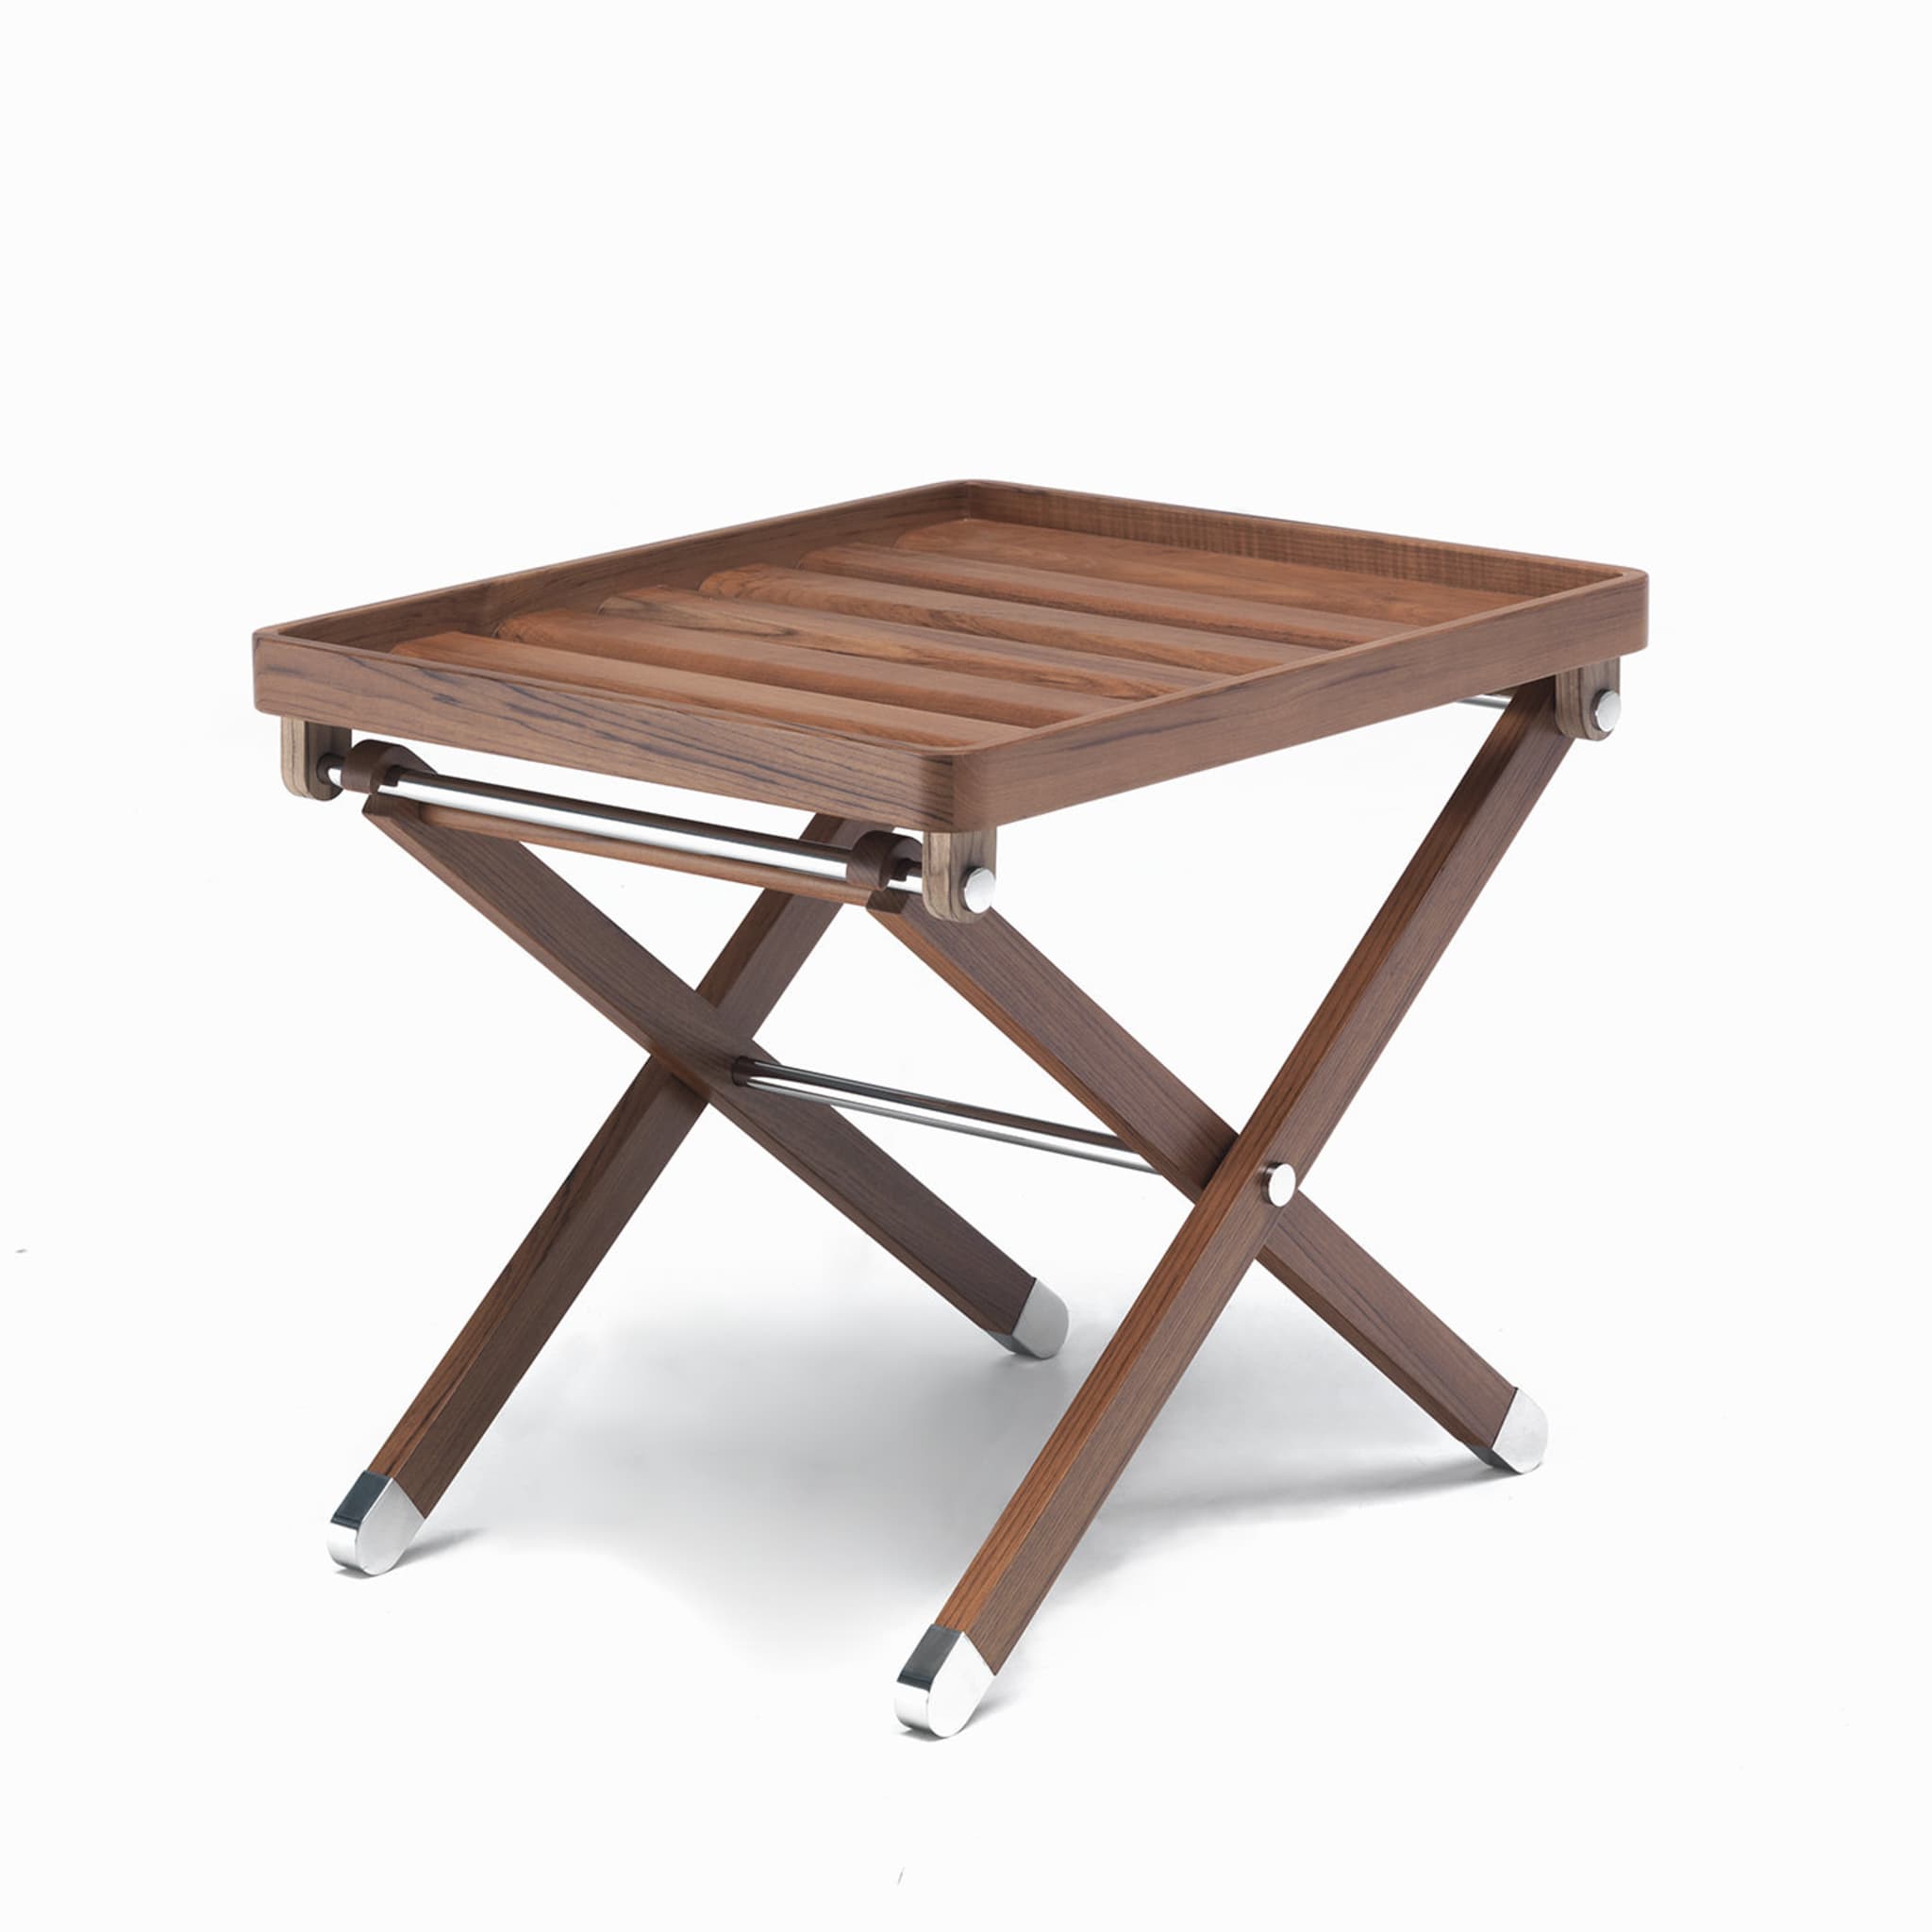 Teak Folding Table by Simone Ciarmoli and Miguel Queda - Alternative view 1